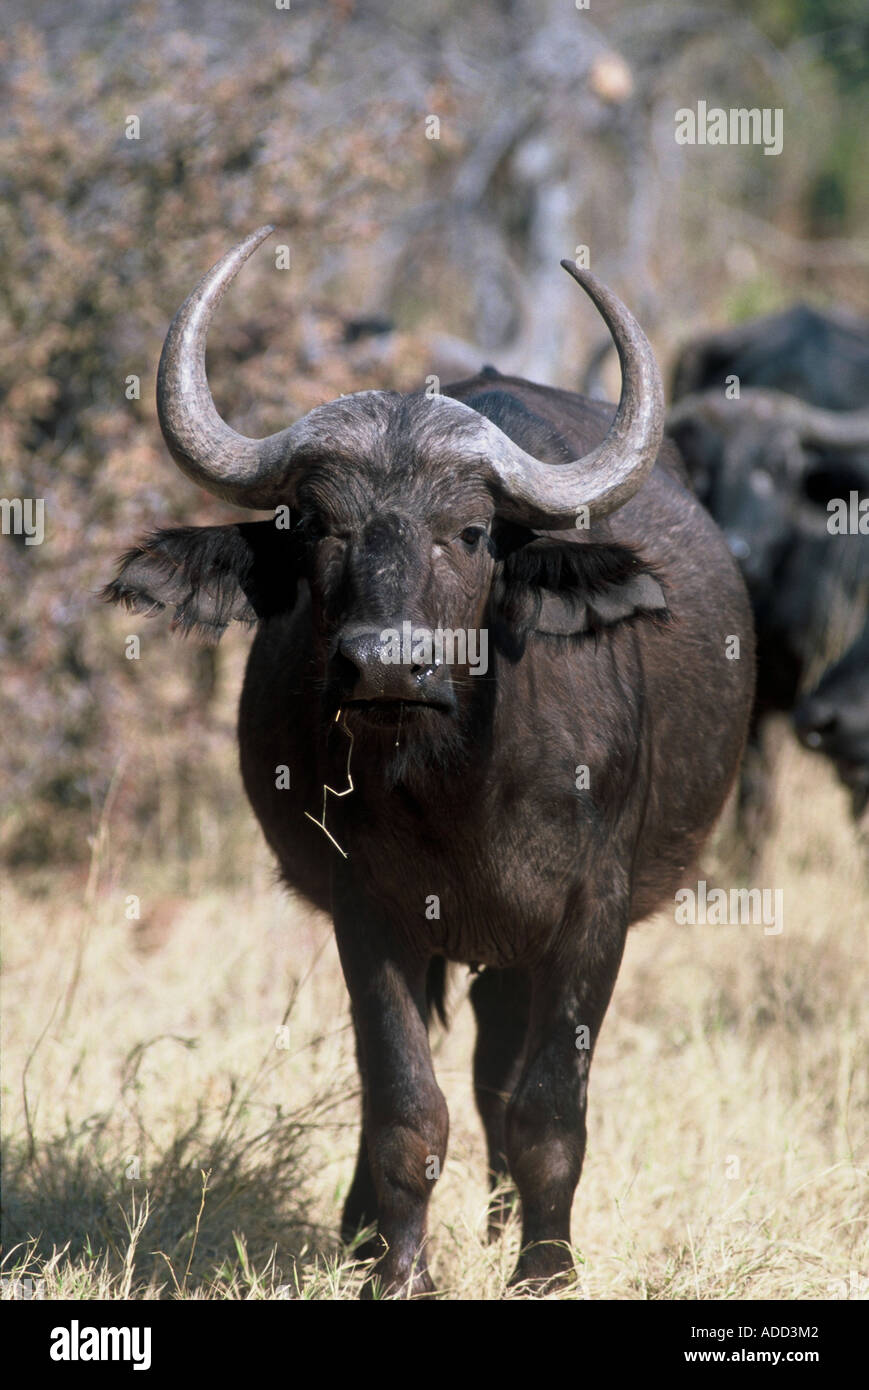 young buffalo, Syncerus caffer Stock Photo